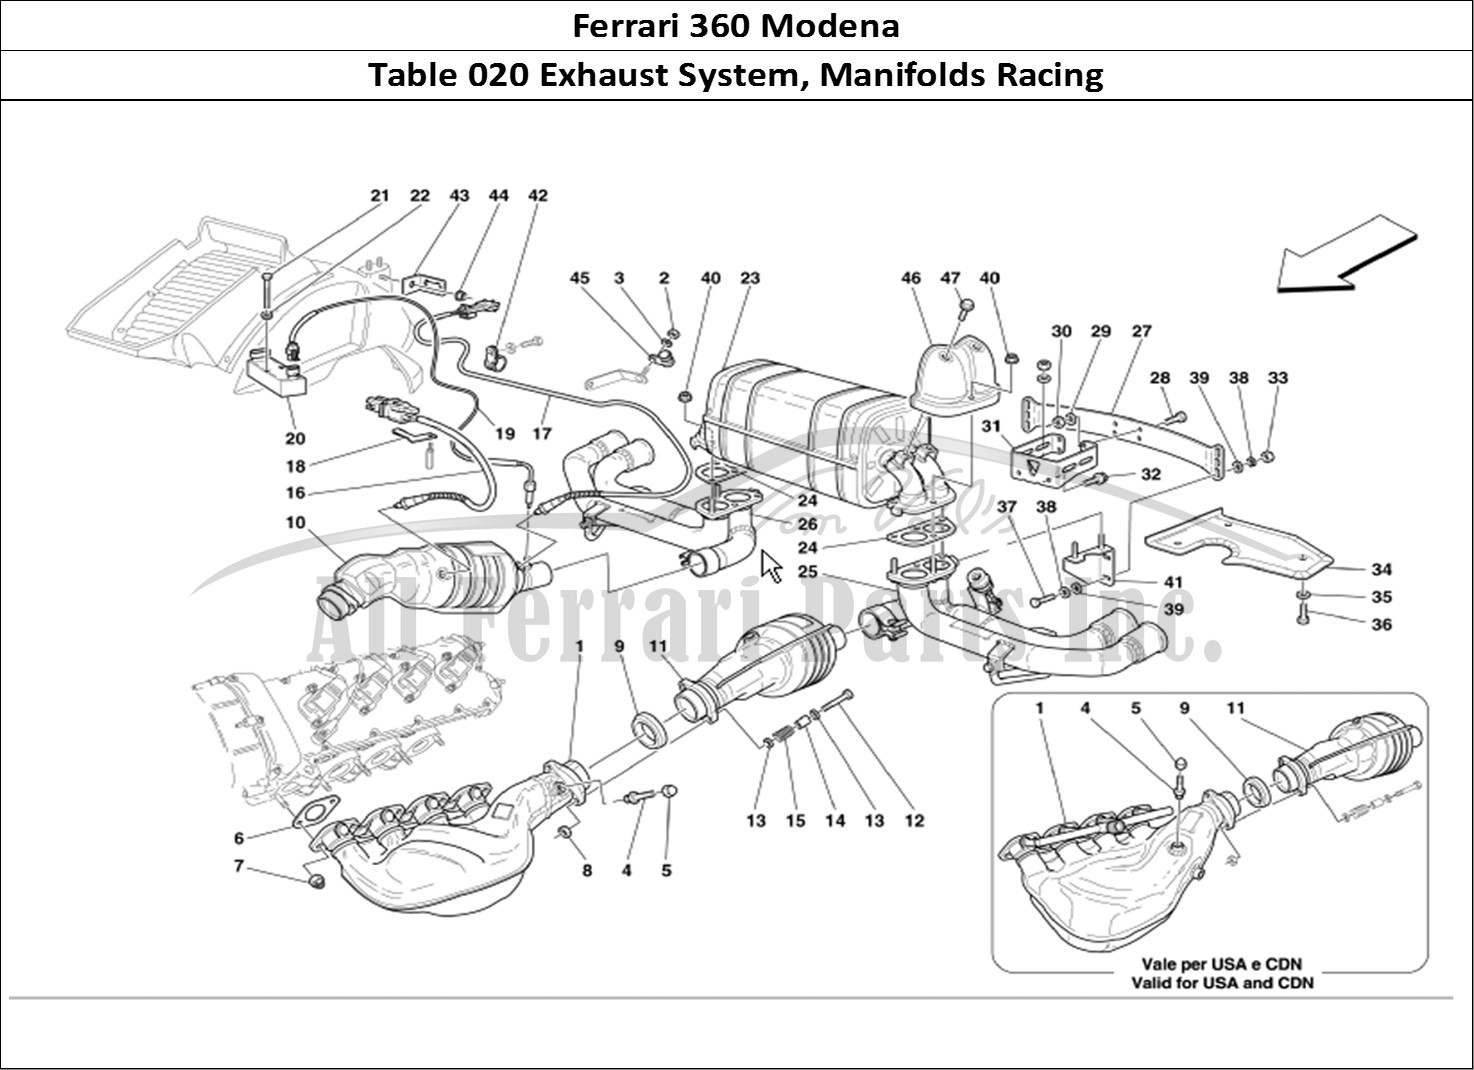 Ferrari Parts Ferrari 360 Modena Page 020 Racing Exhaust System -Op